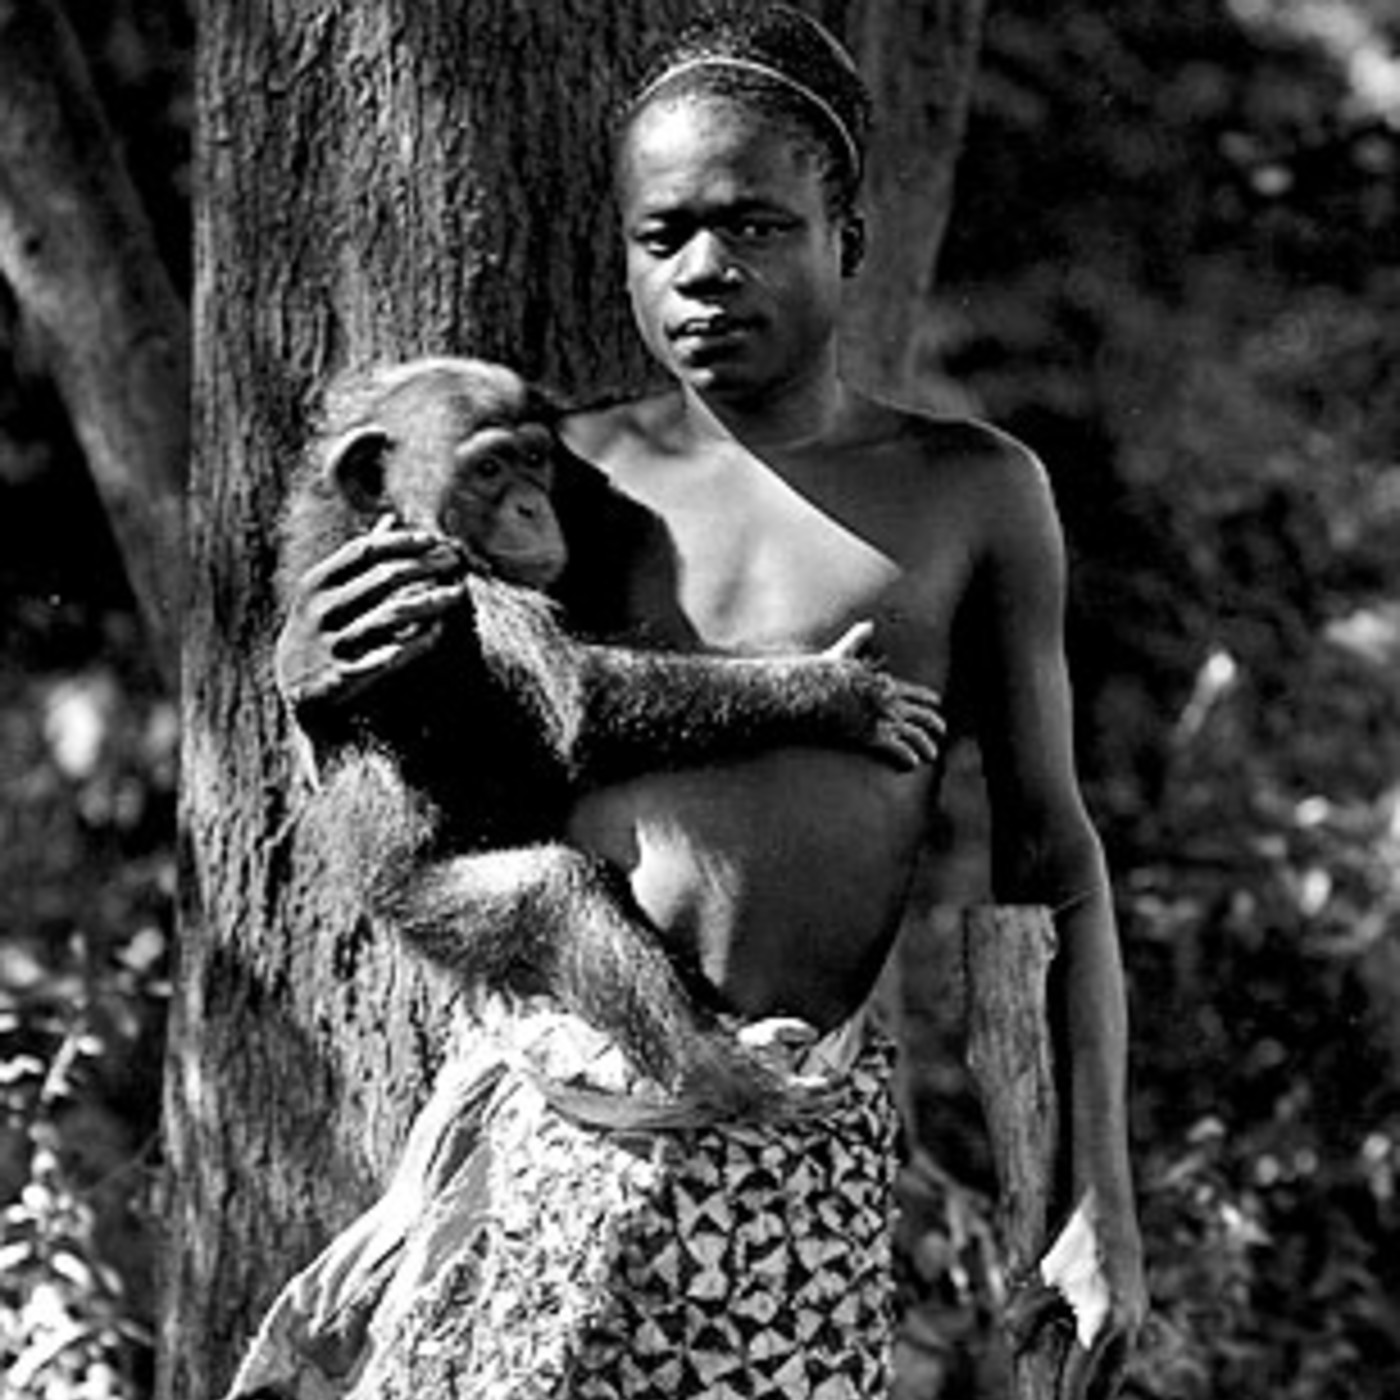 154 - Ota Benga and Human Zoos